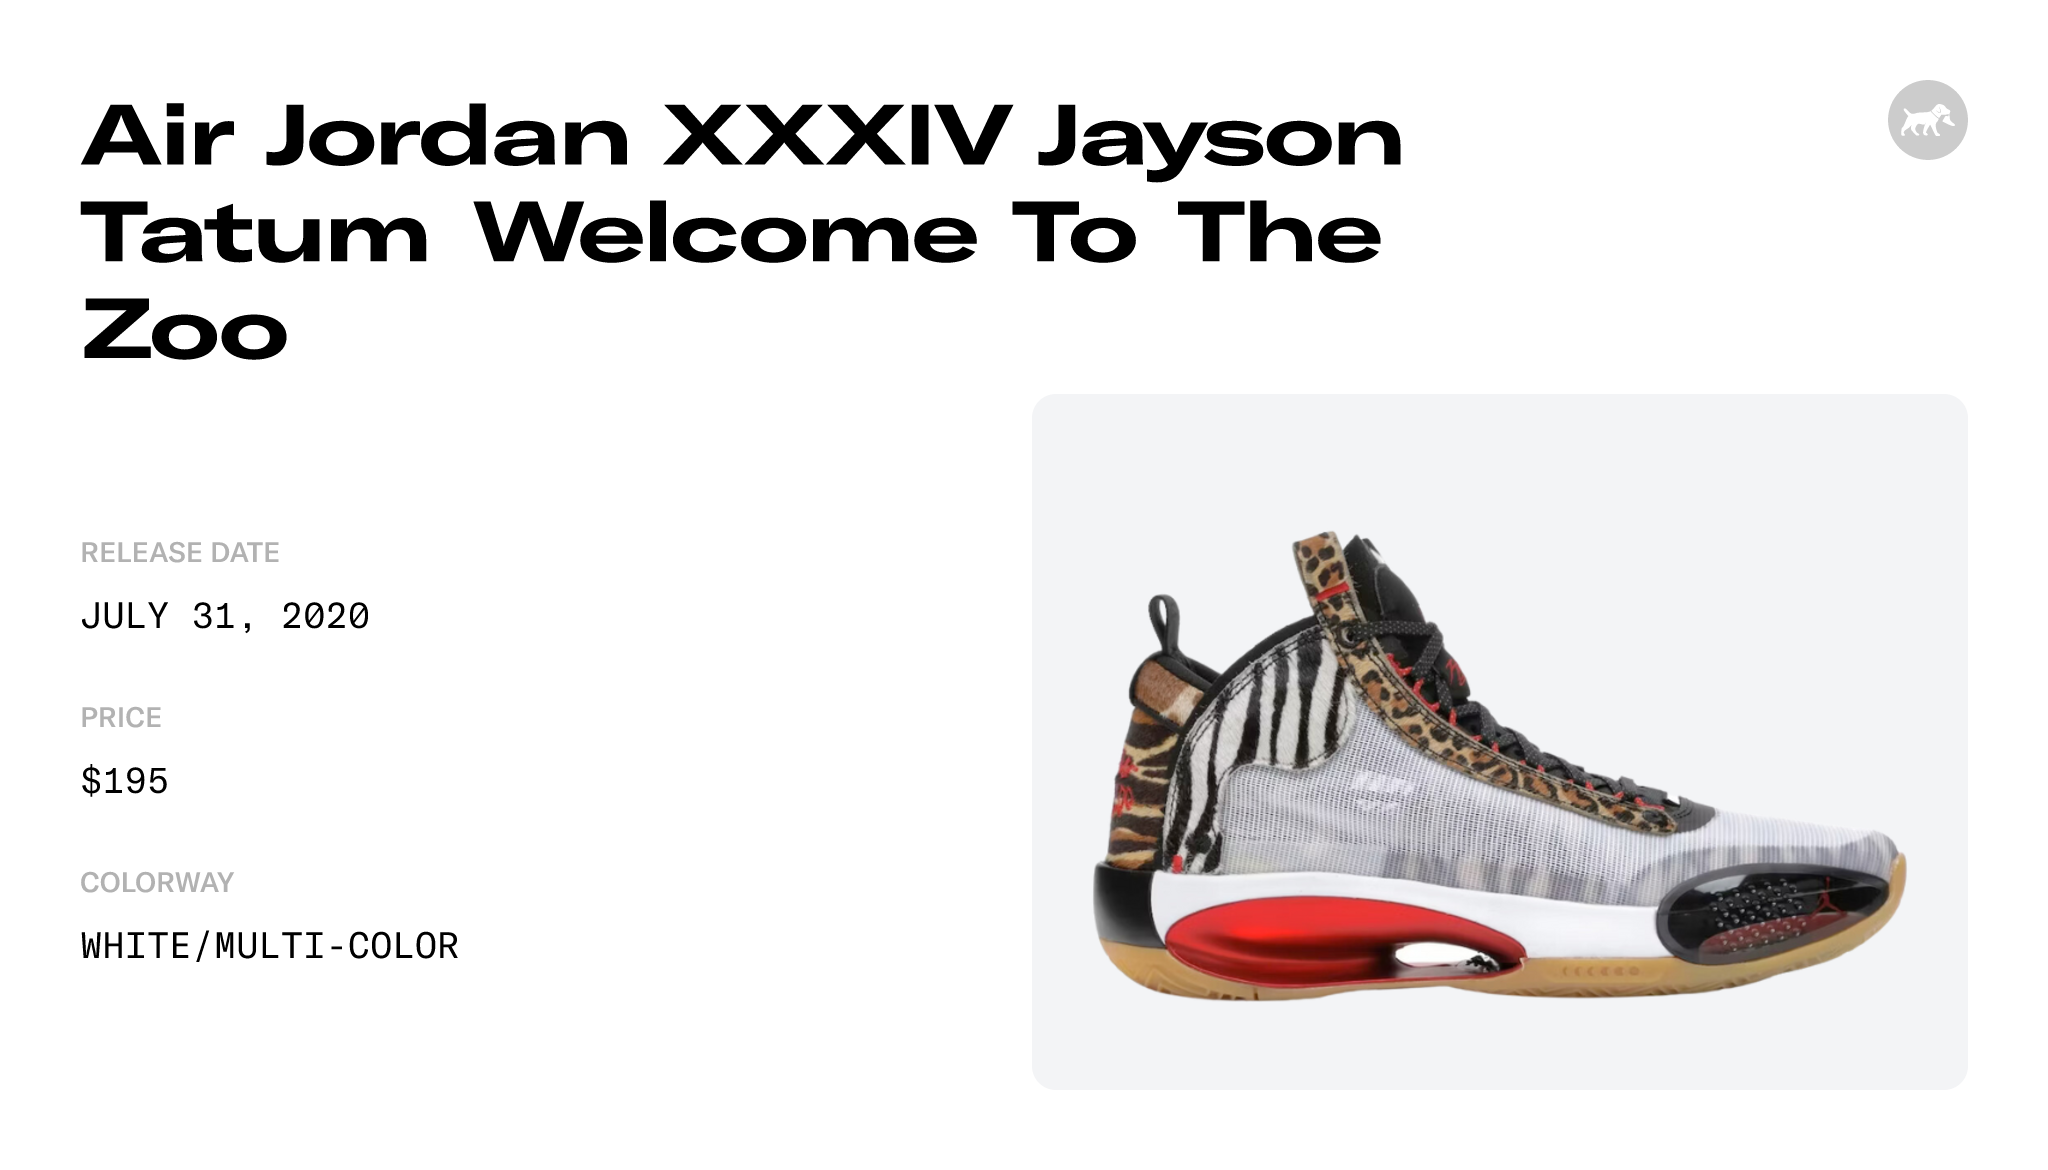 Air Jordan XXXIV Jayson Tatum To The Zoo DA1899900 Raffles